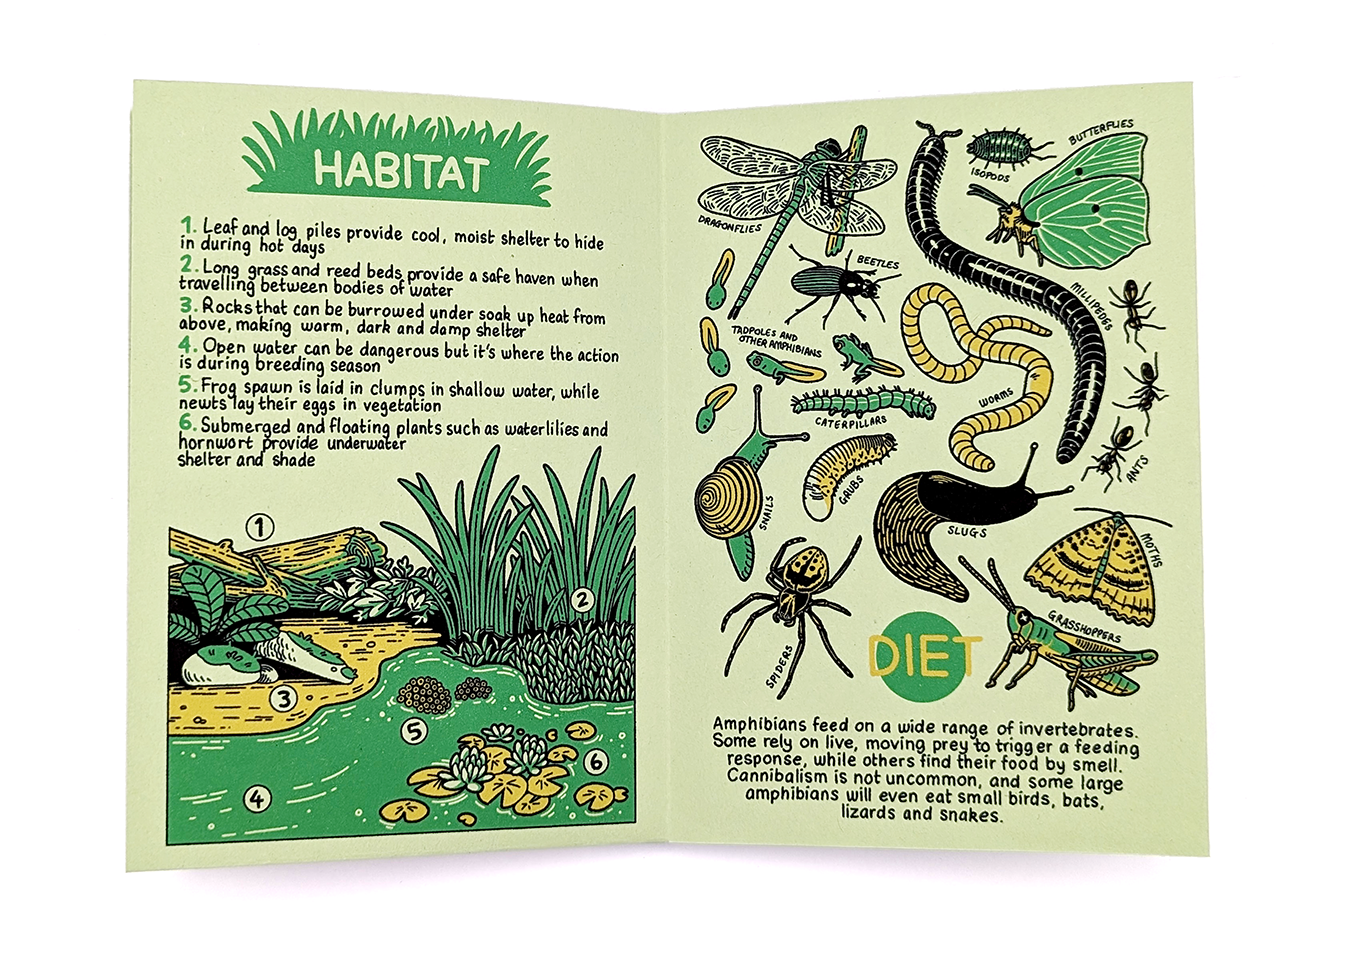 A Pocket Guide to Amphibians